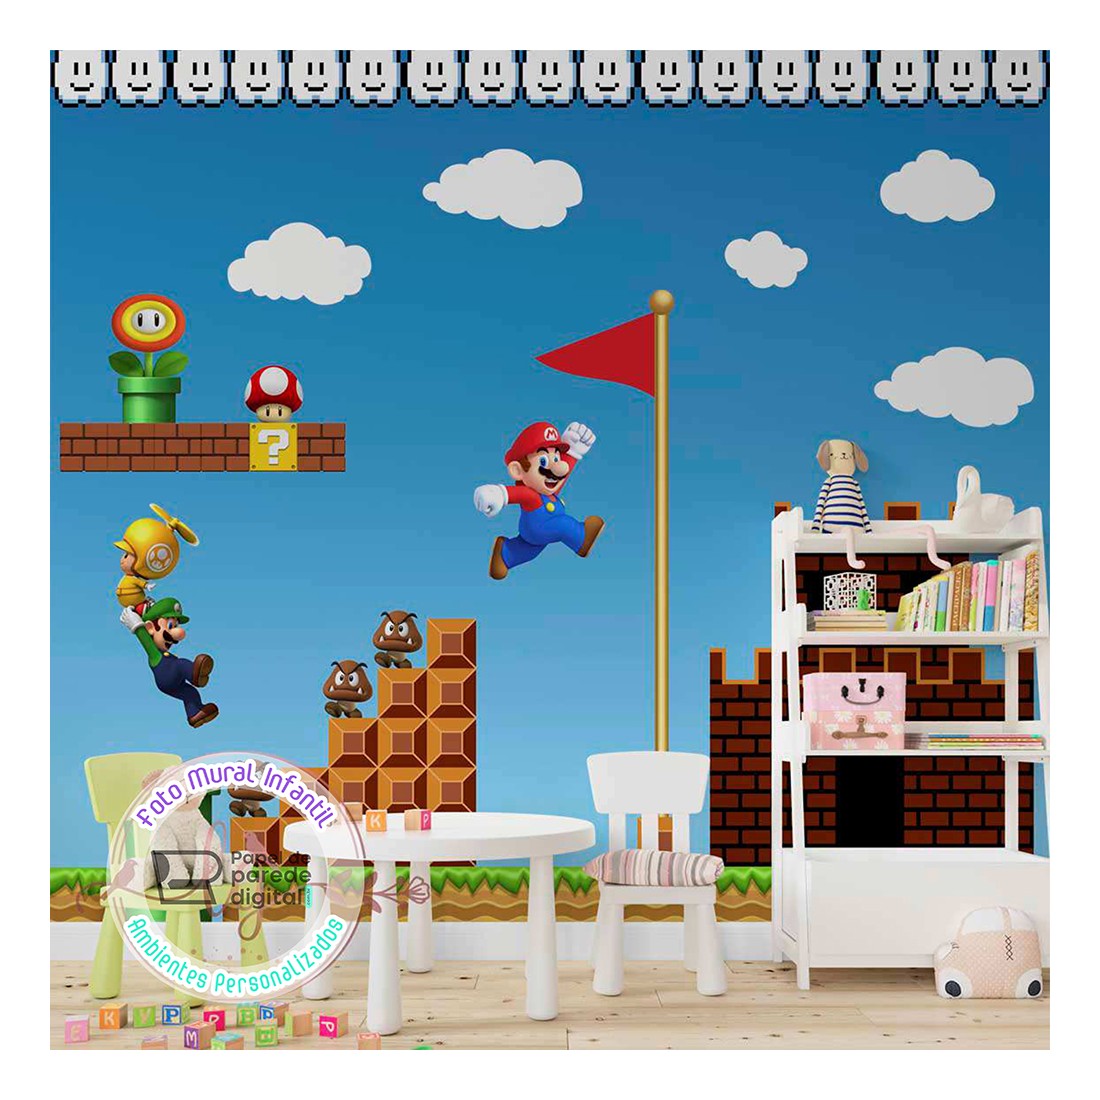 Tela do jogo Mario Bros Stock Photo - Alamy